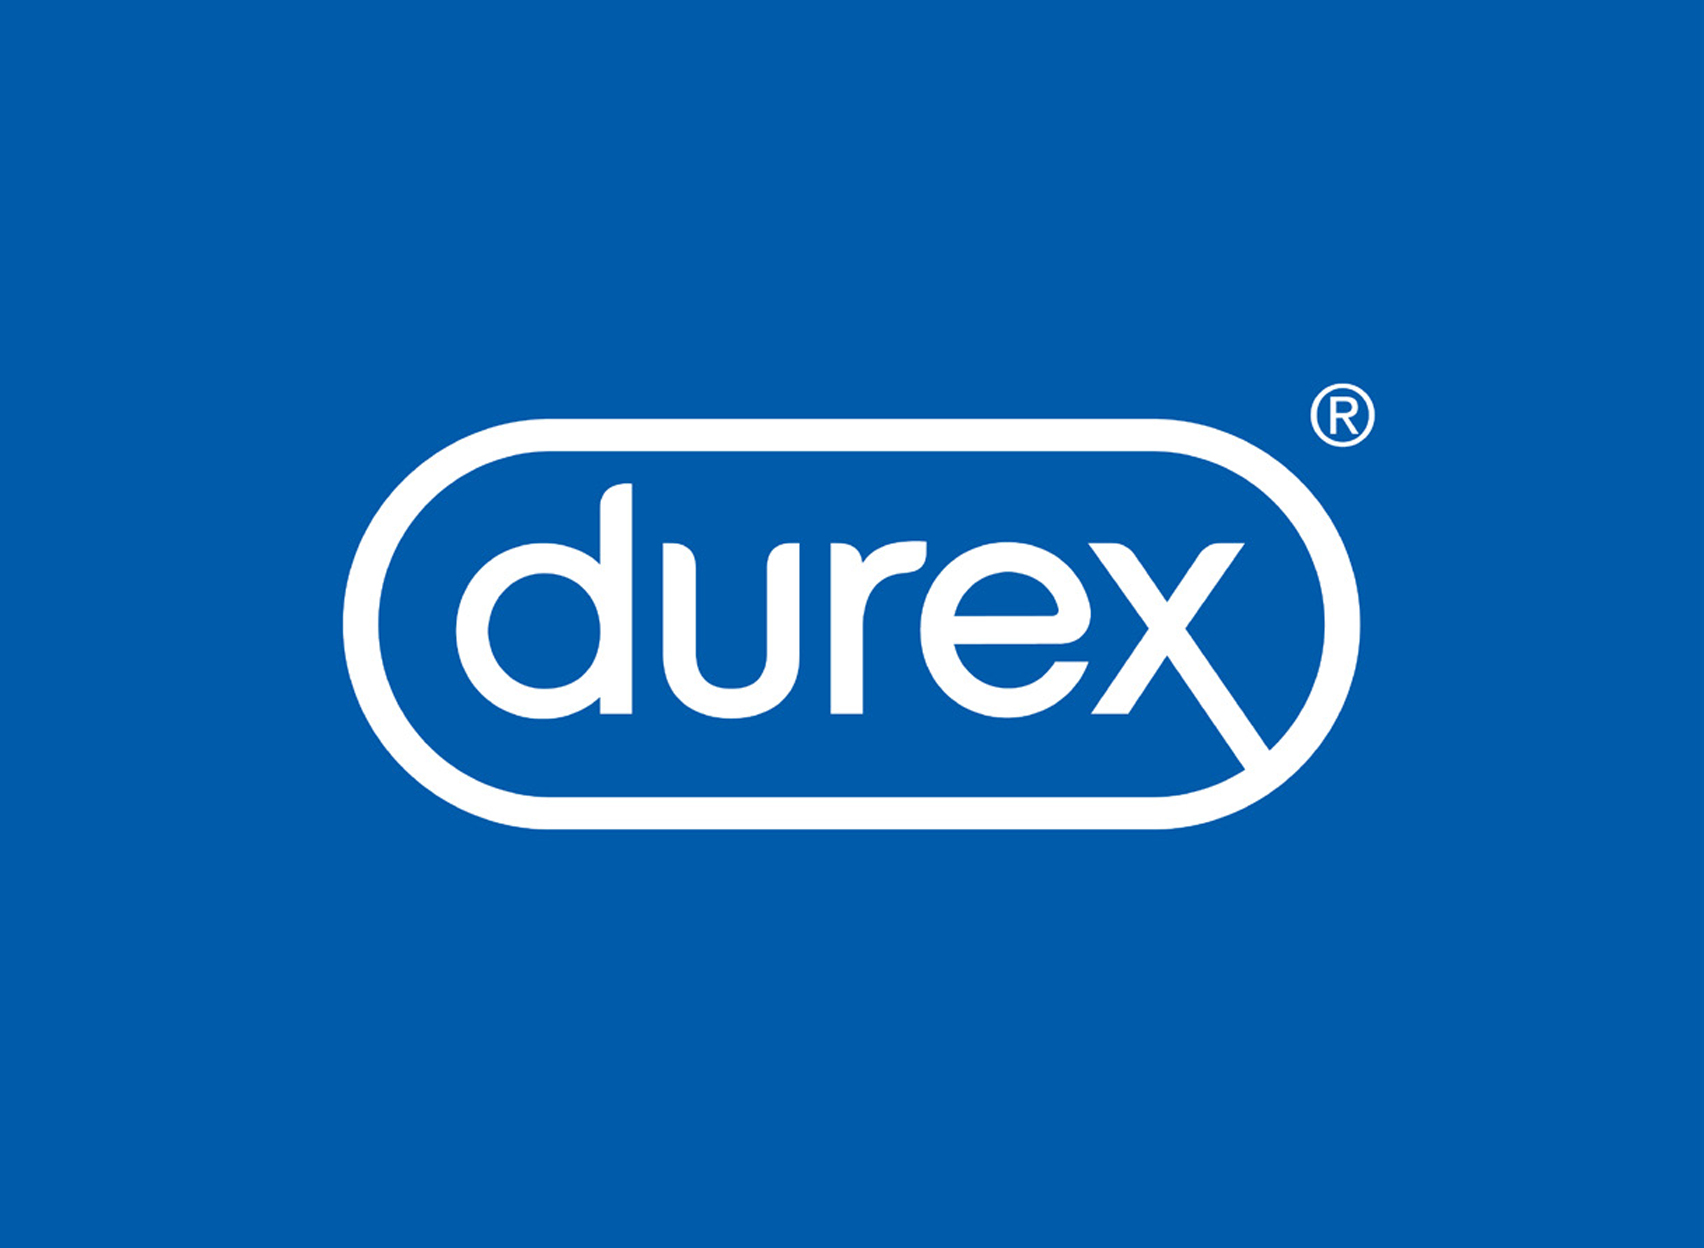 Durex Stock Footage ~ Royalty Free Stock Videos | Pond5